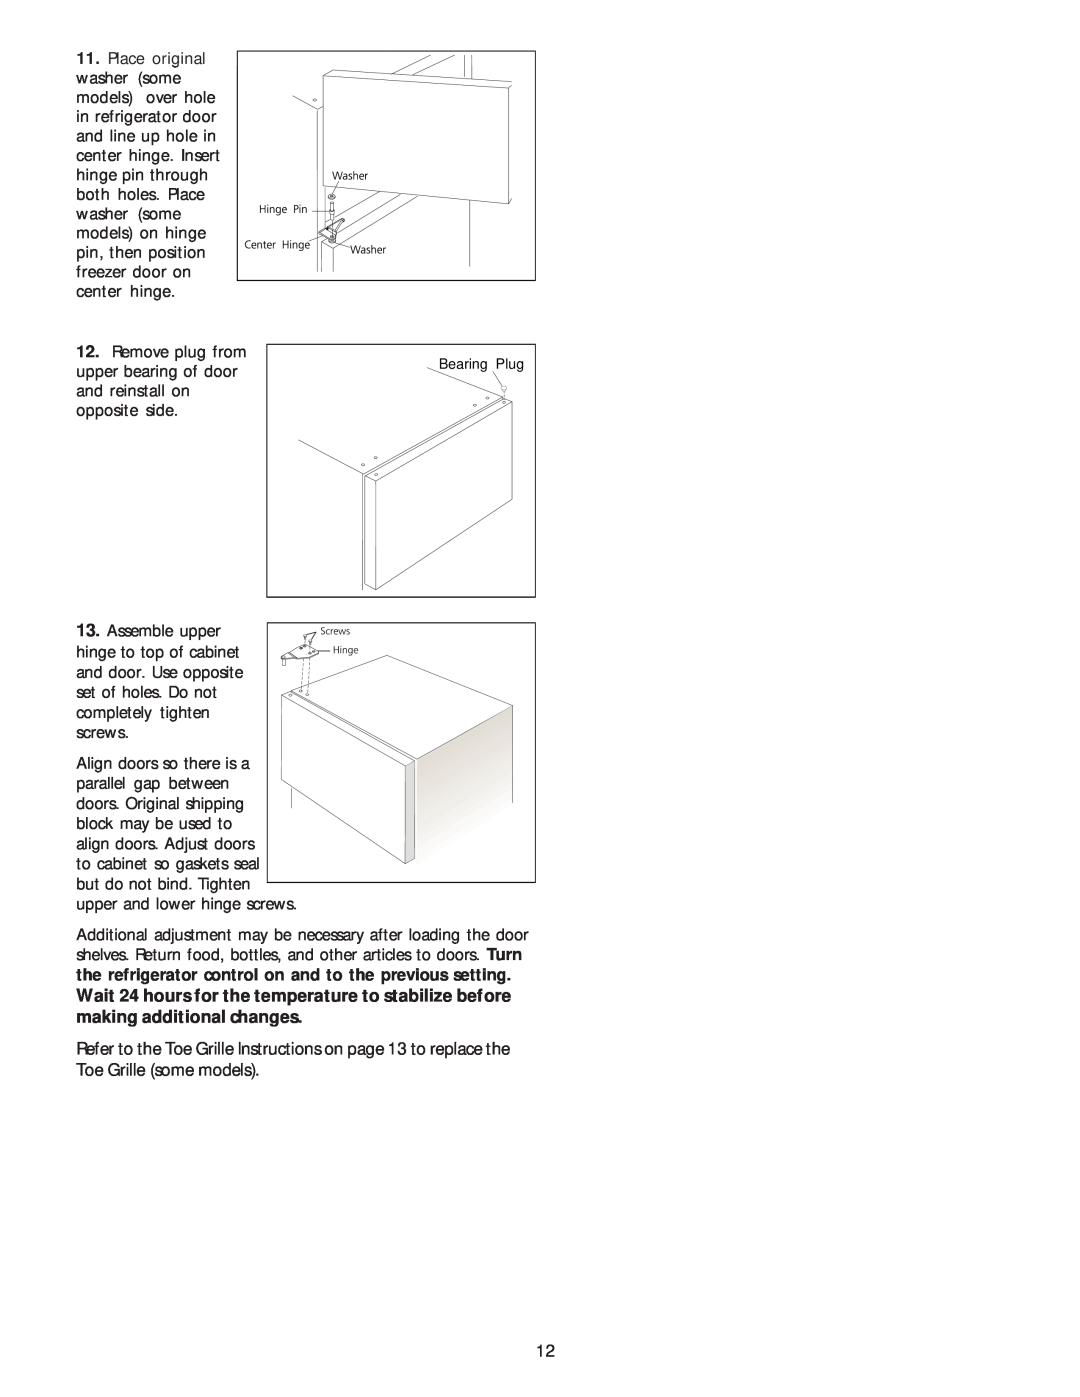 White-Westinghouse Top Freezer manual 